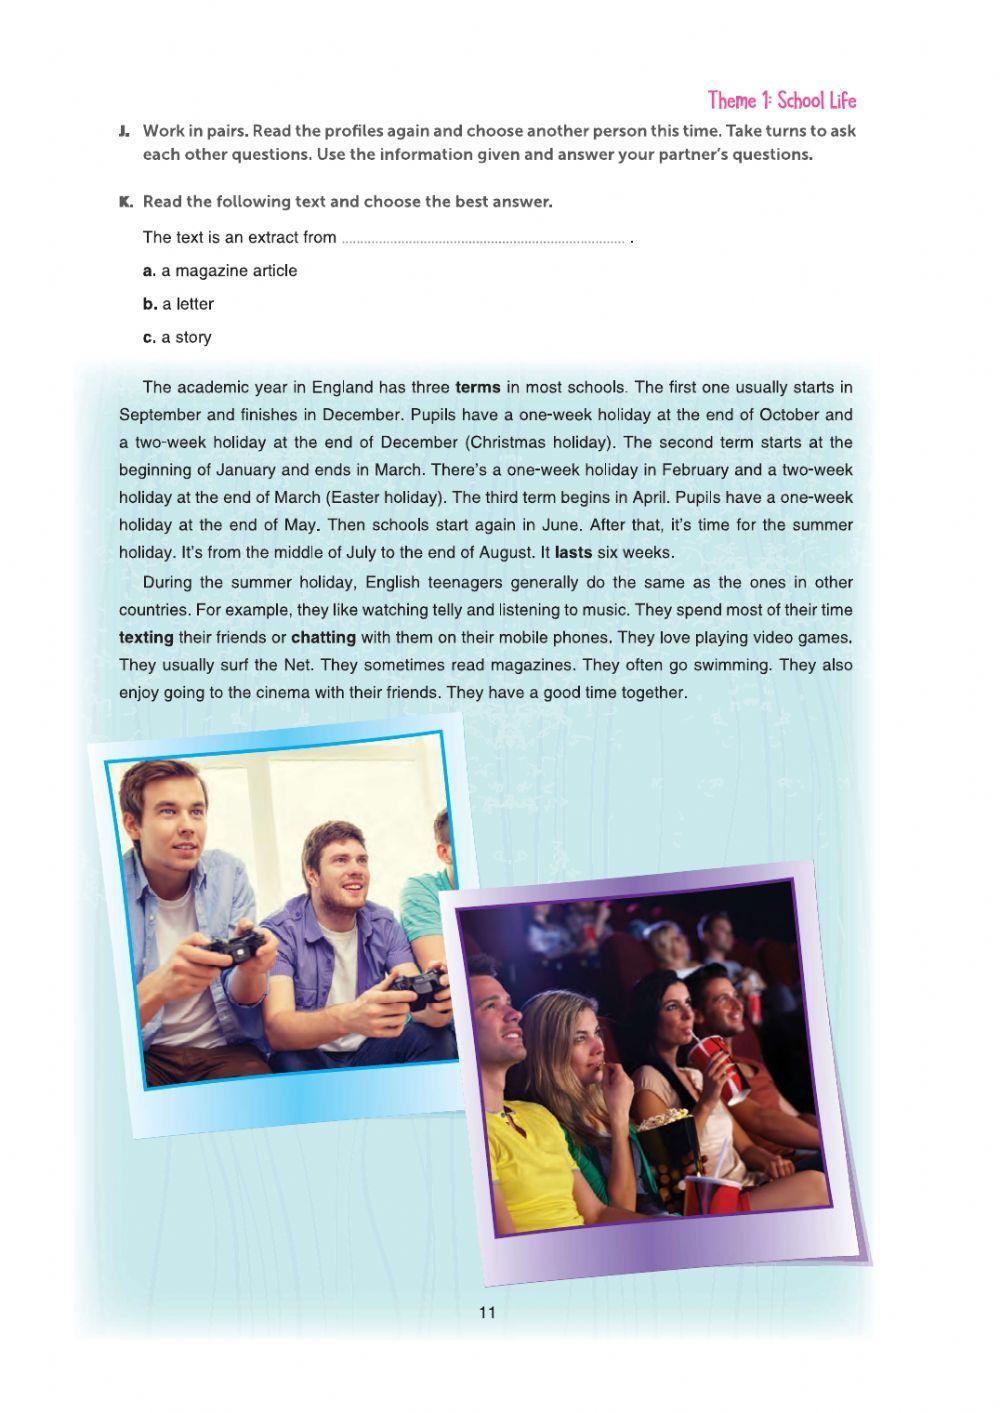 Grade 10 Theme1 School Life Page 11-12